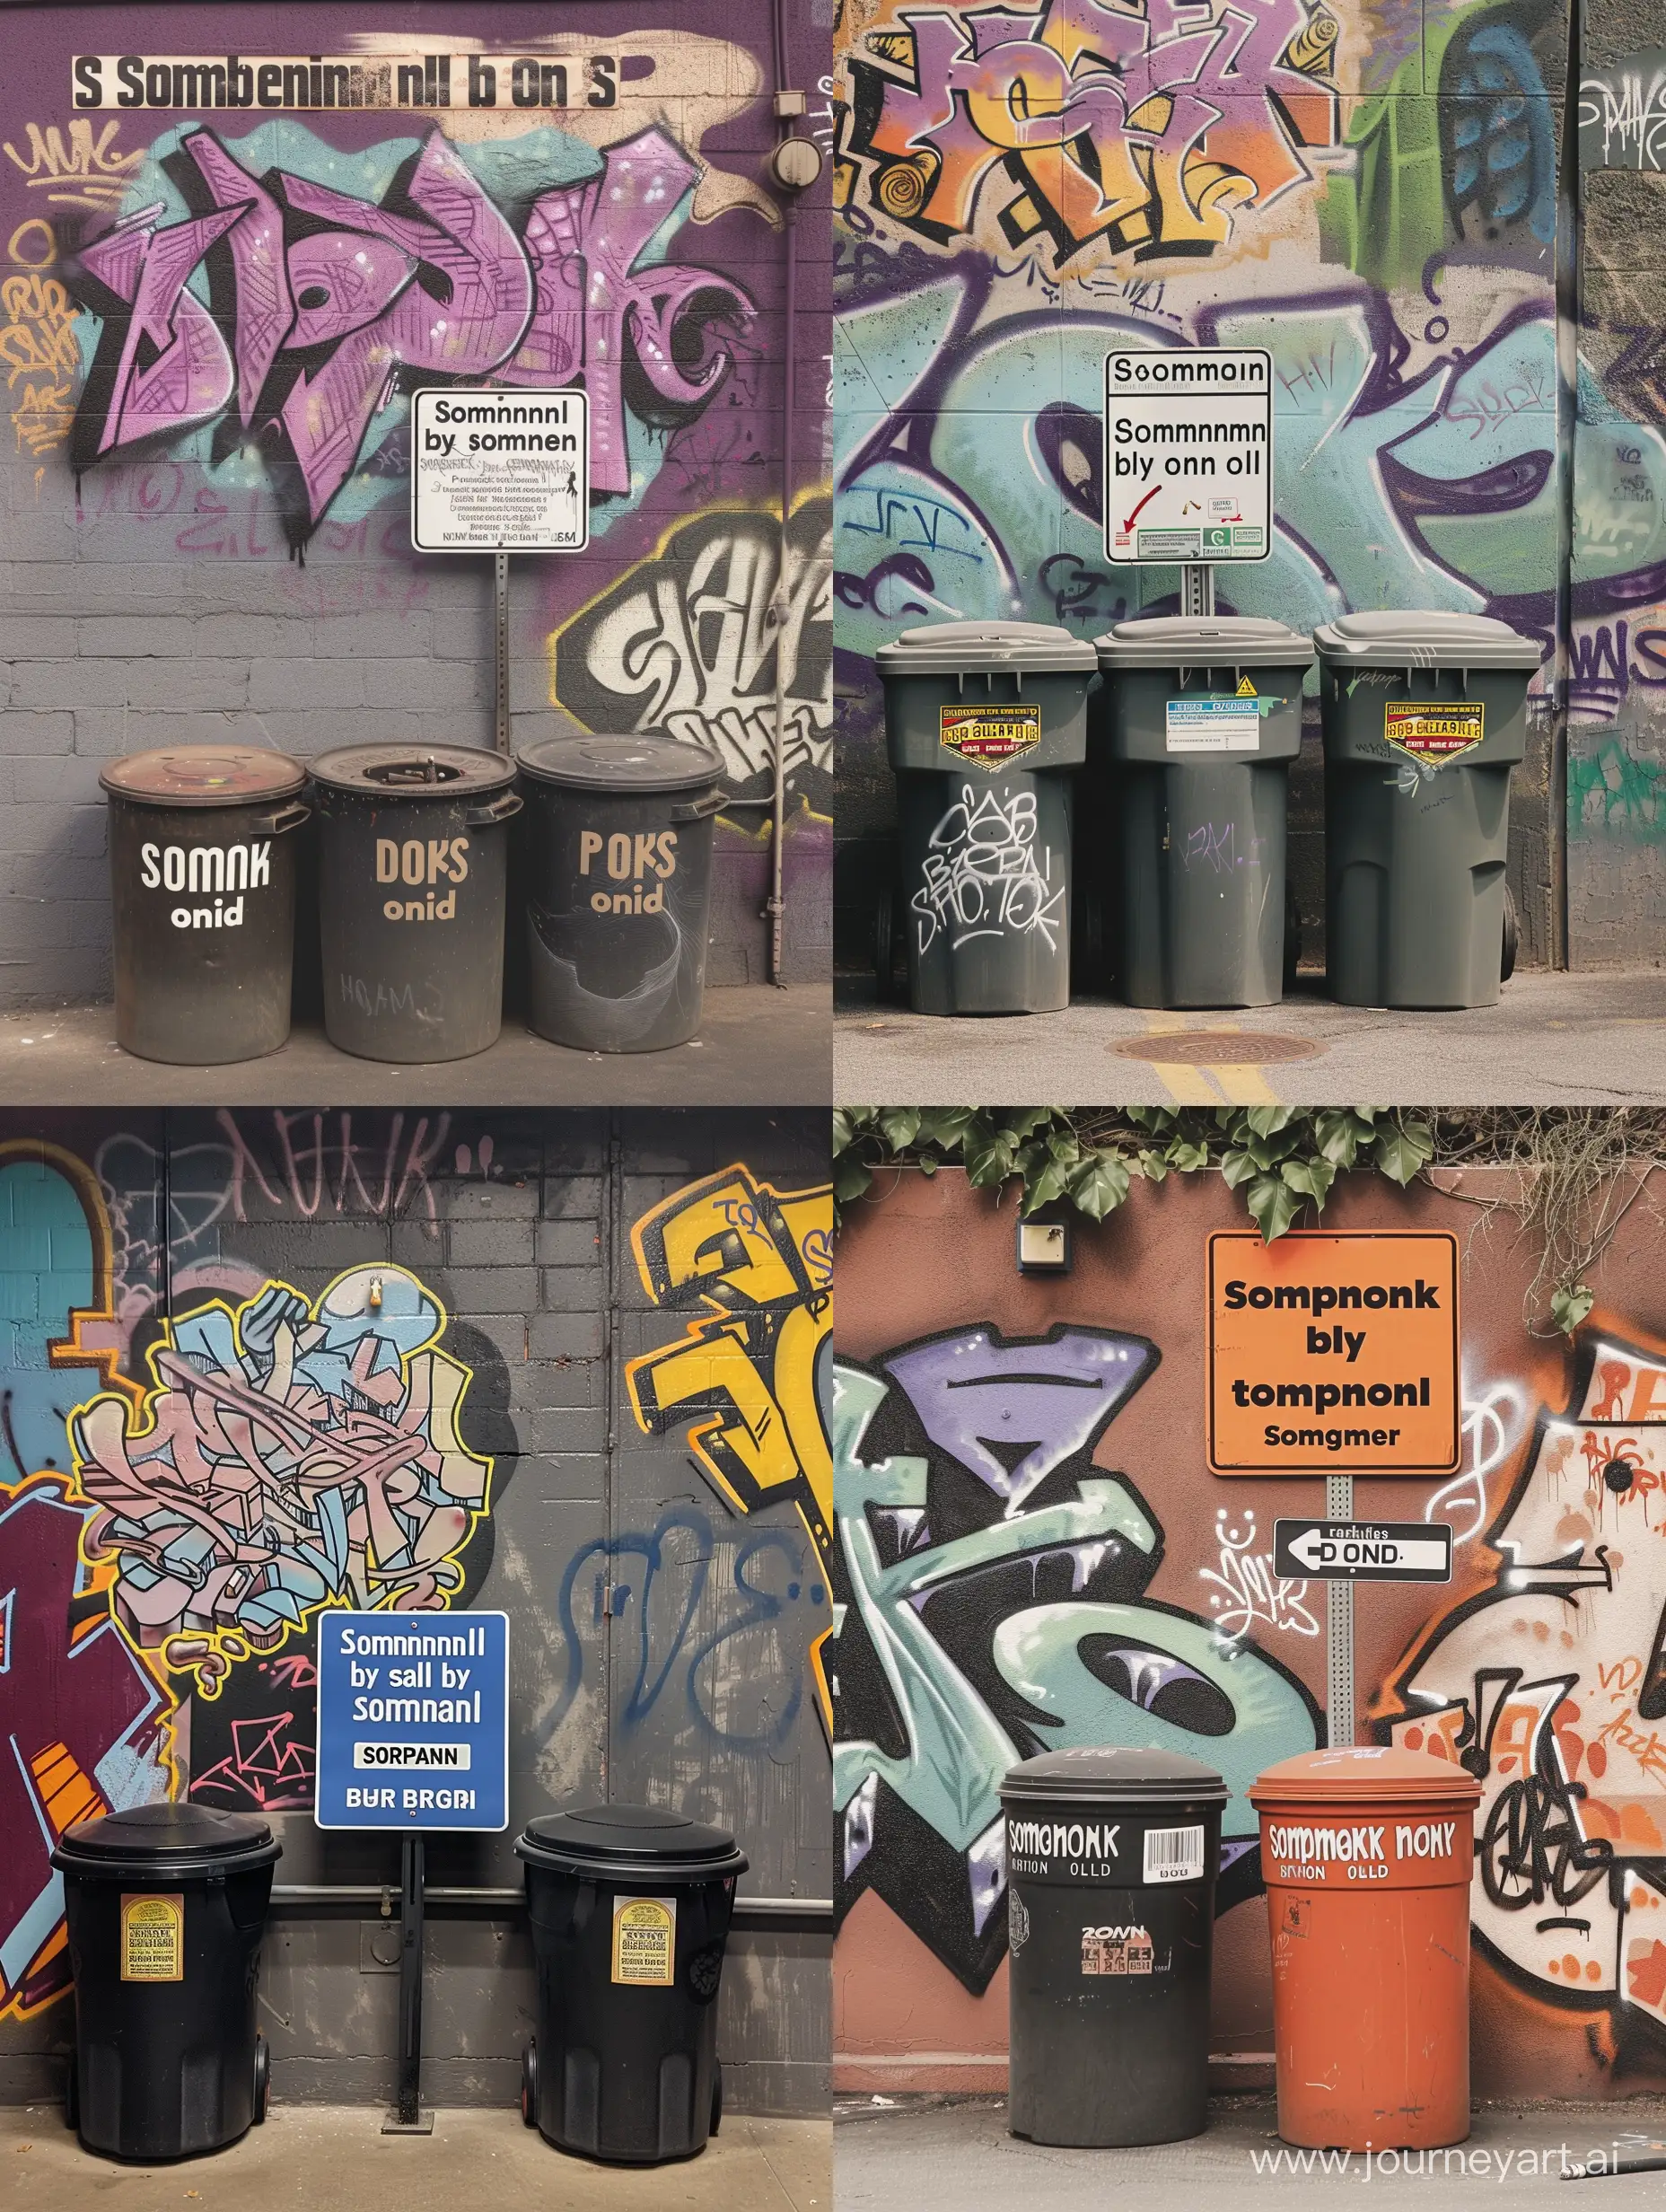 Urban-Guidance-Smoking-Zones-by-Graffiti-Art